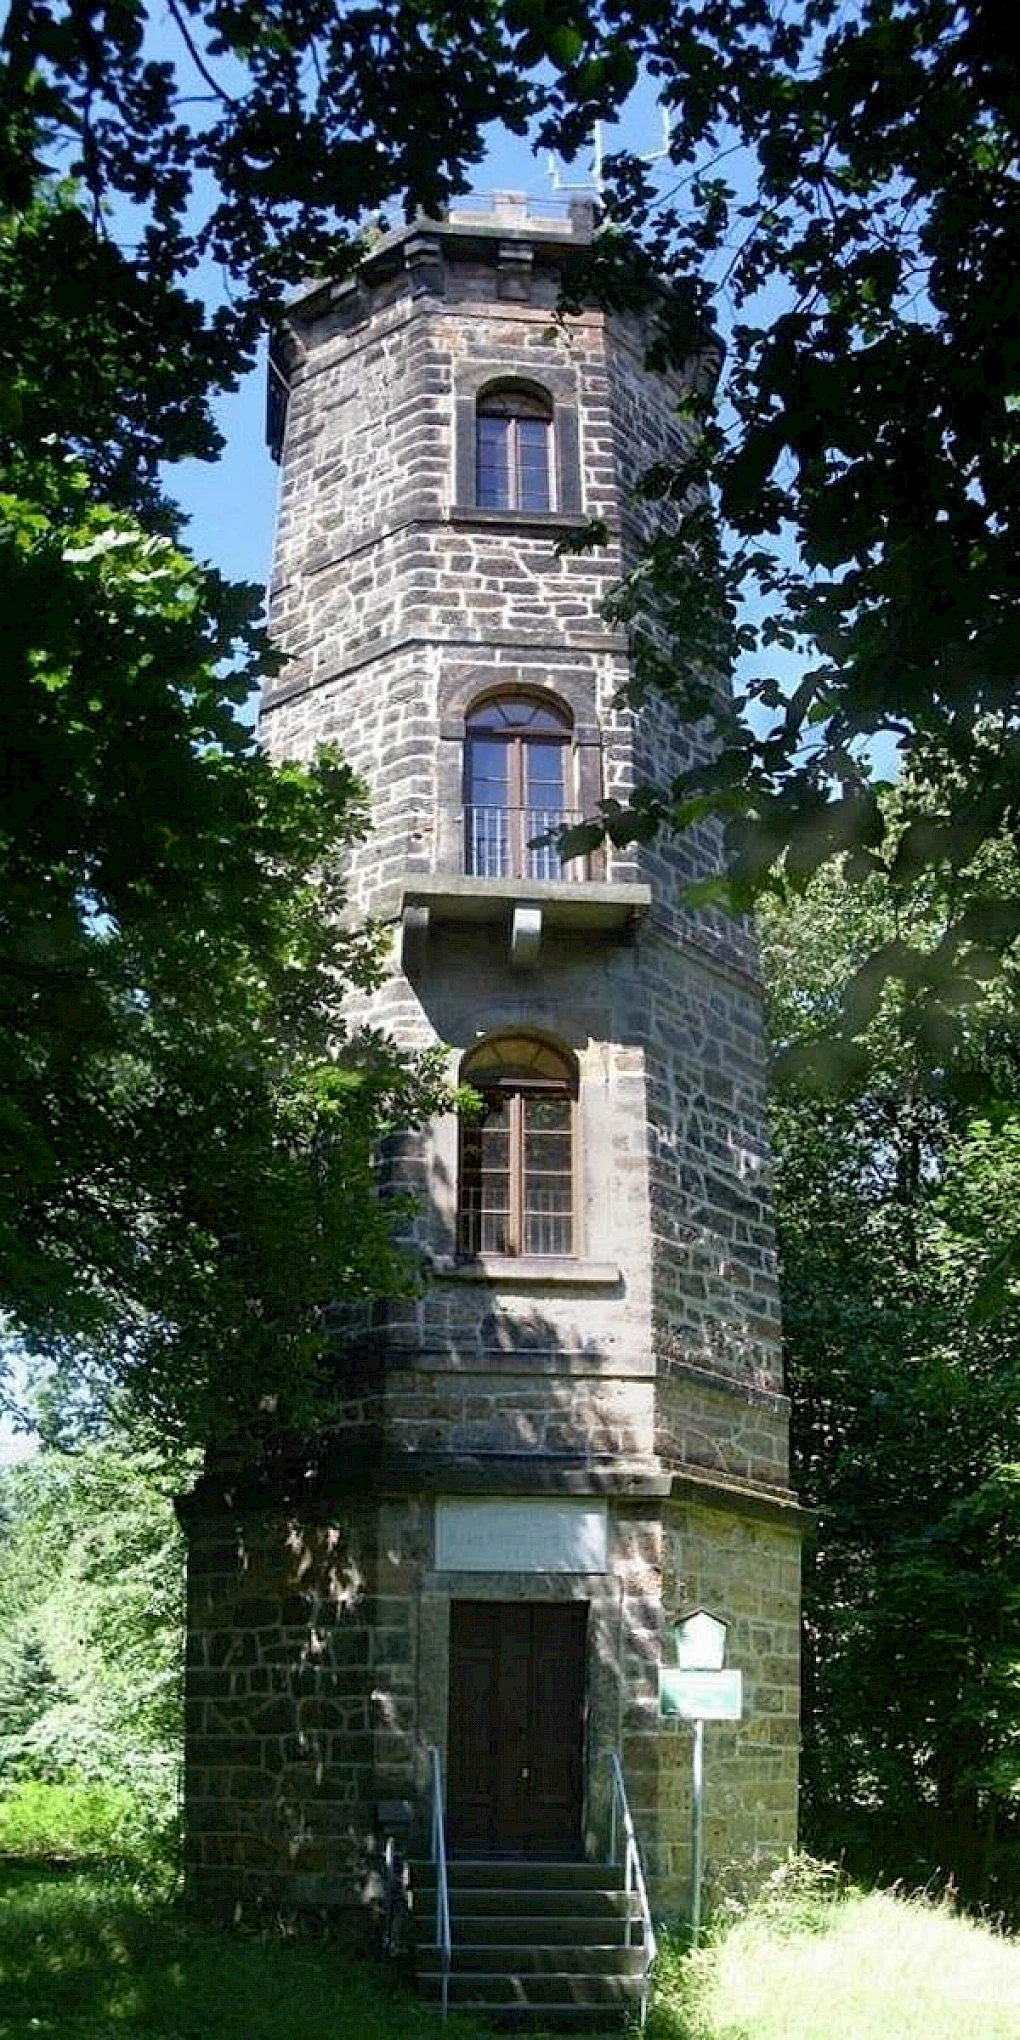 King Johann tower in Dippoldiswalde (© Geri-oc; Wikipedia; CC BY-SA 3.0)